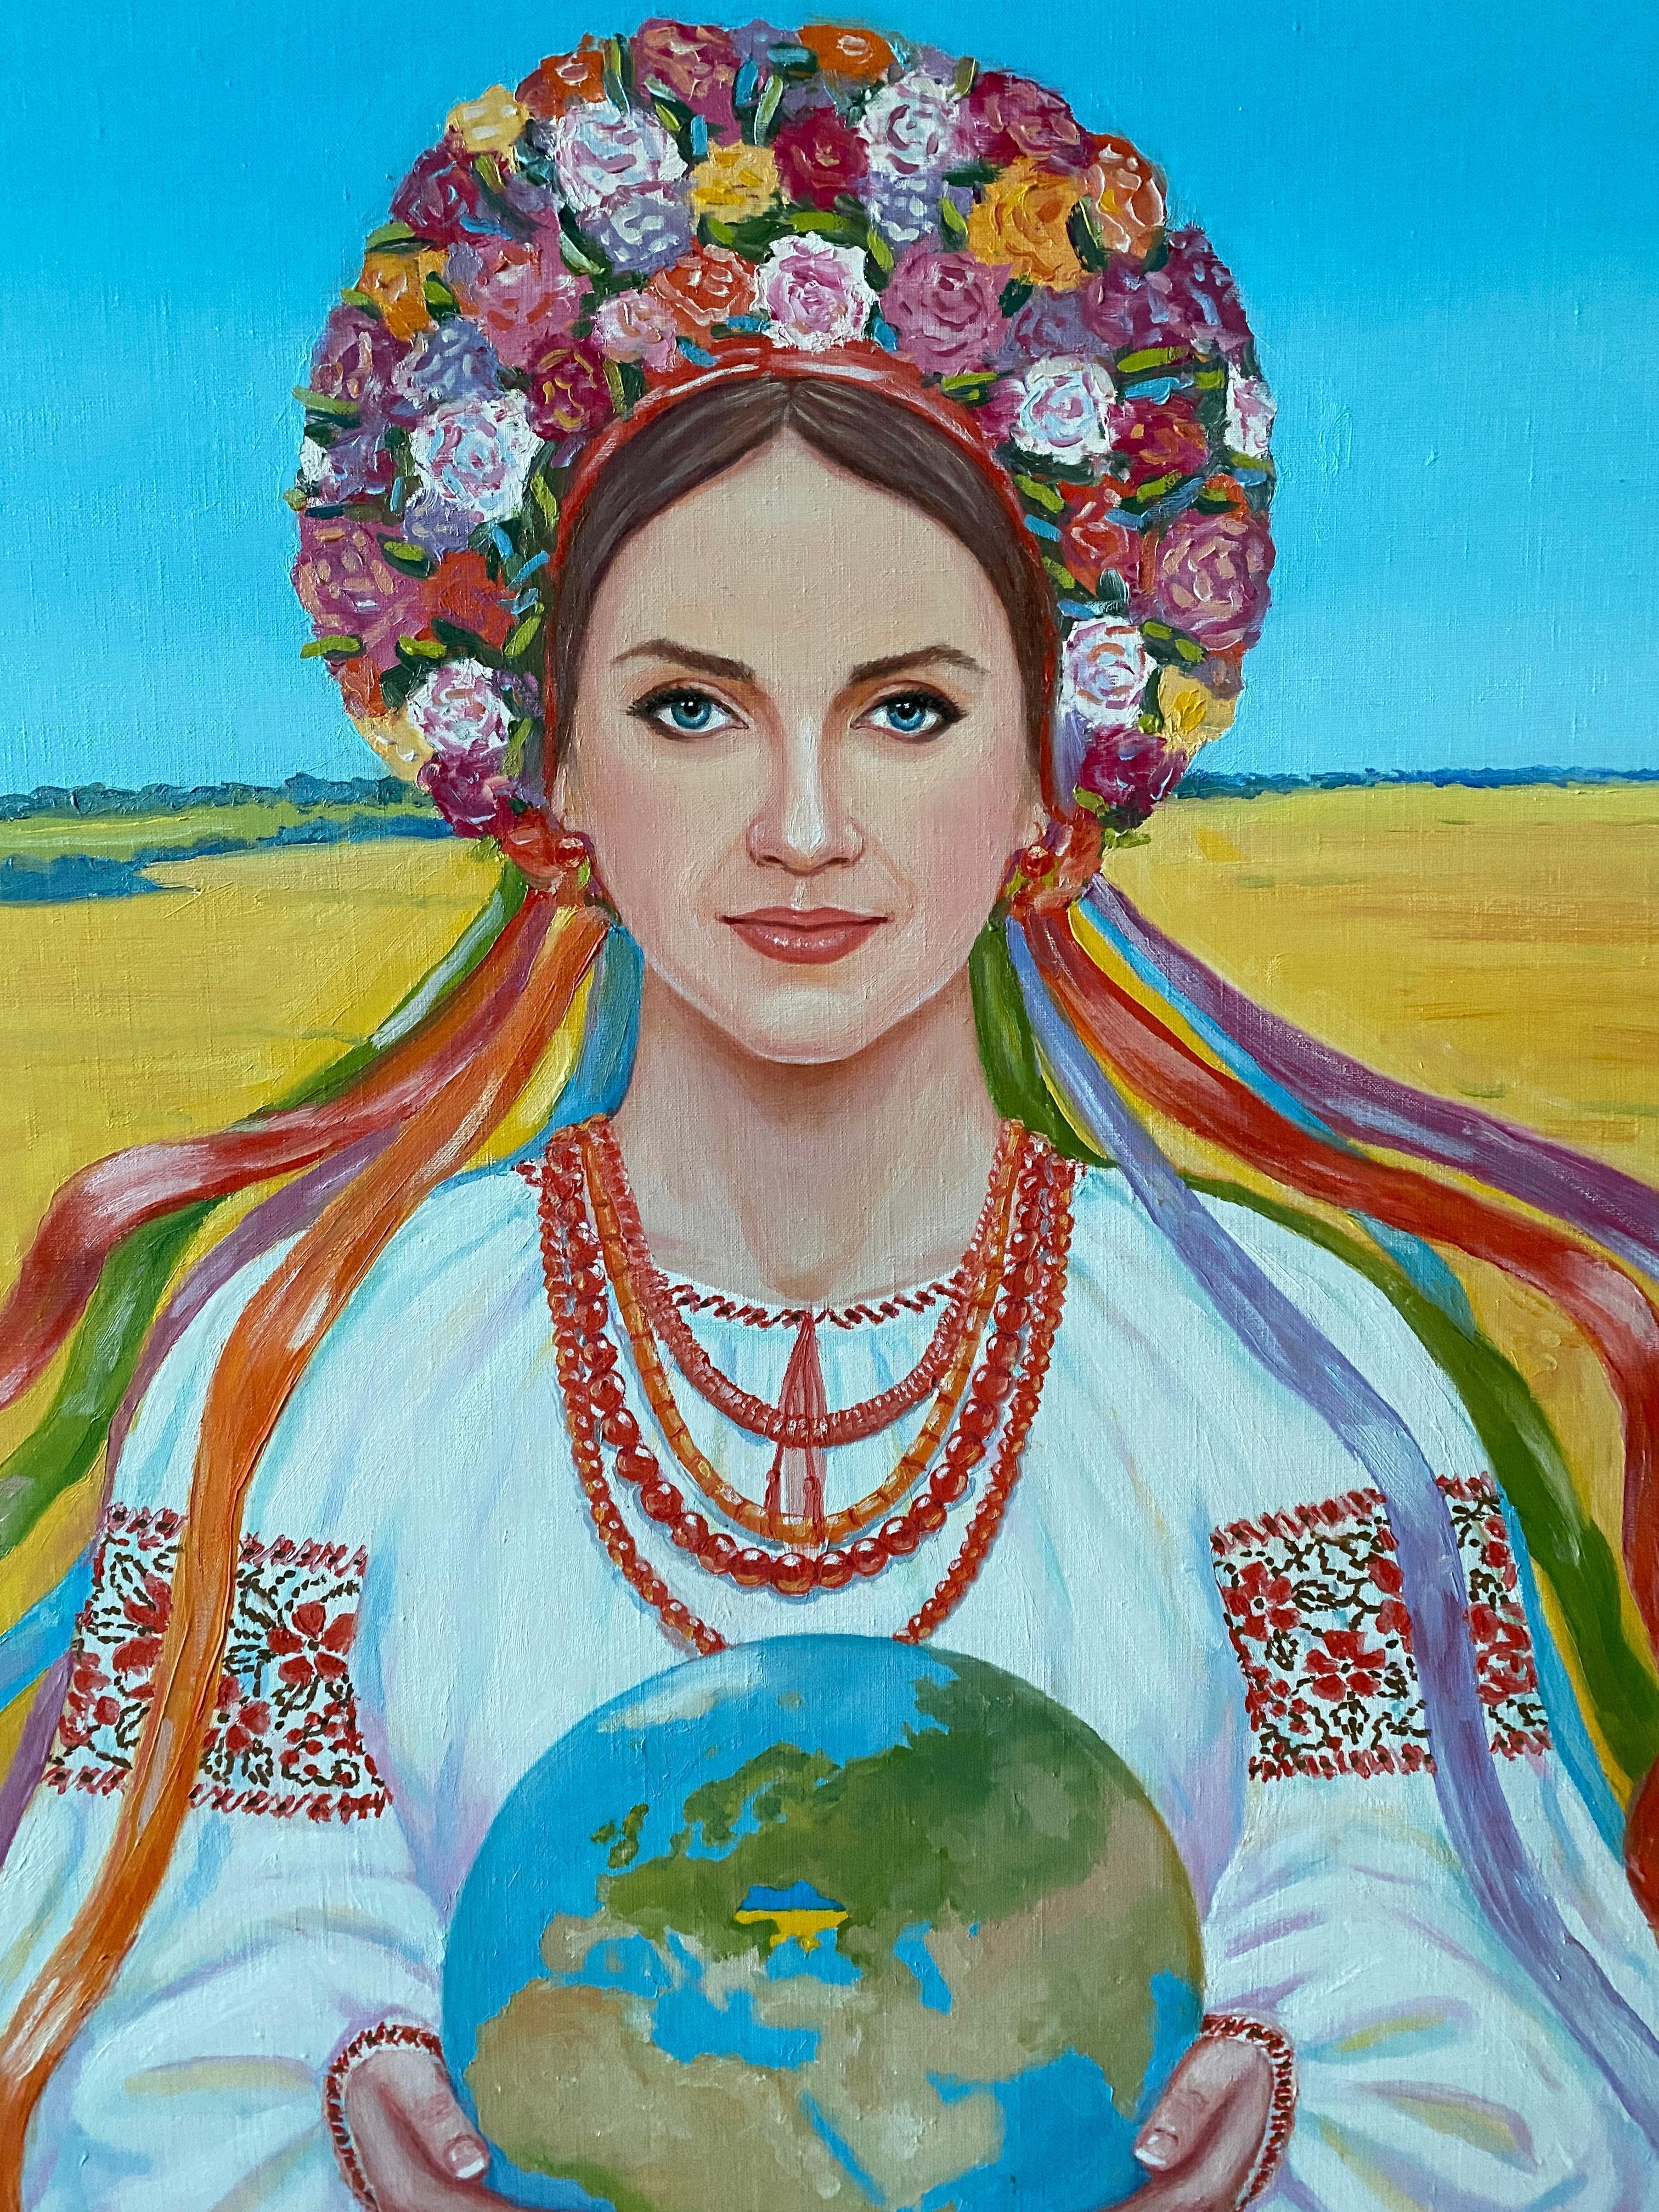 Ukraine is united - Painting by Pavlo Marinets